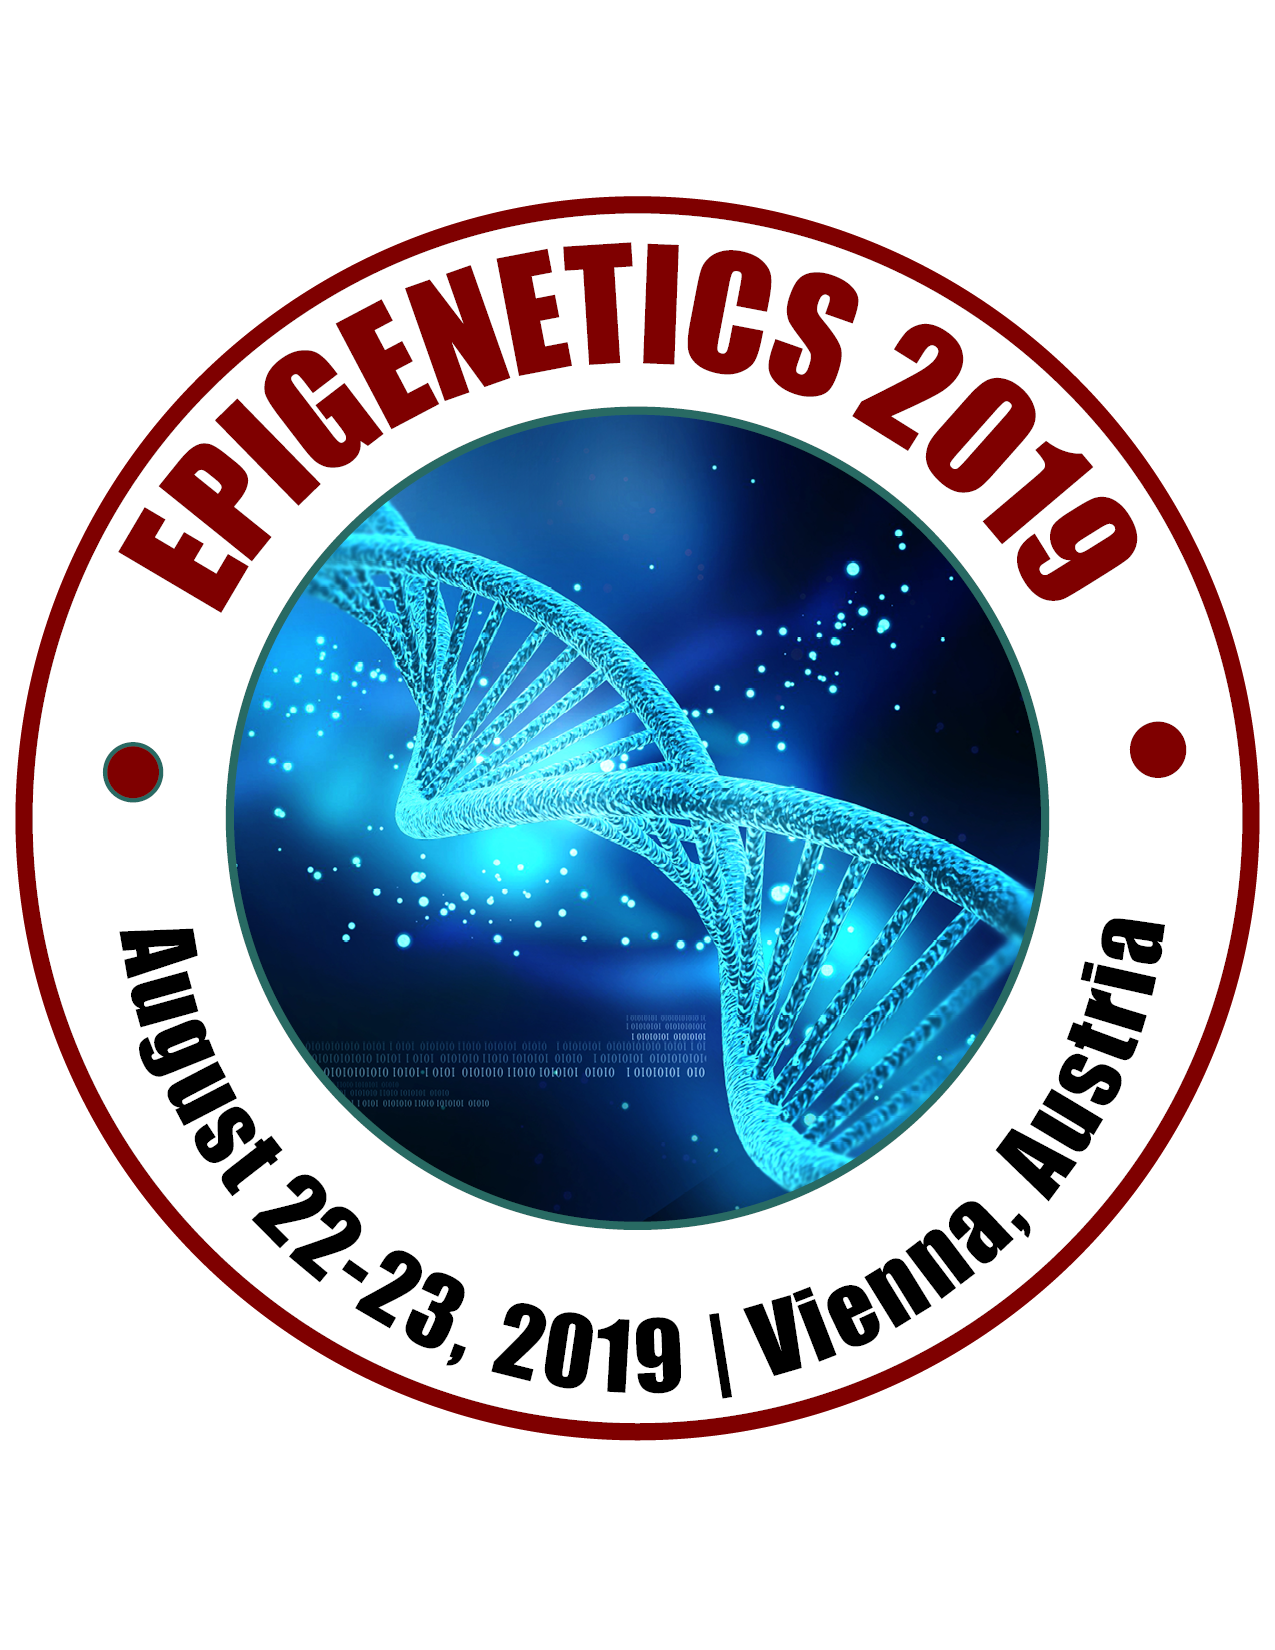 5th International Congress on Epigenetics & Chromatin, Vienna, Burgenland, Austria